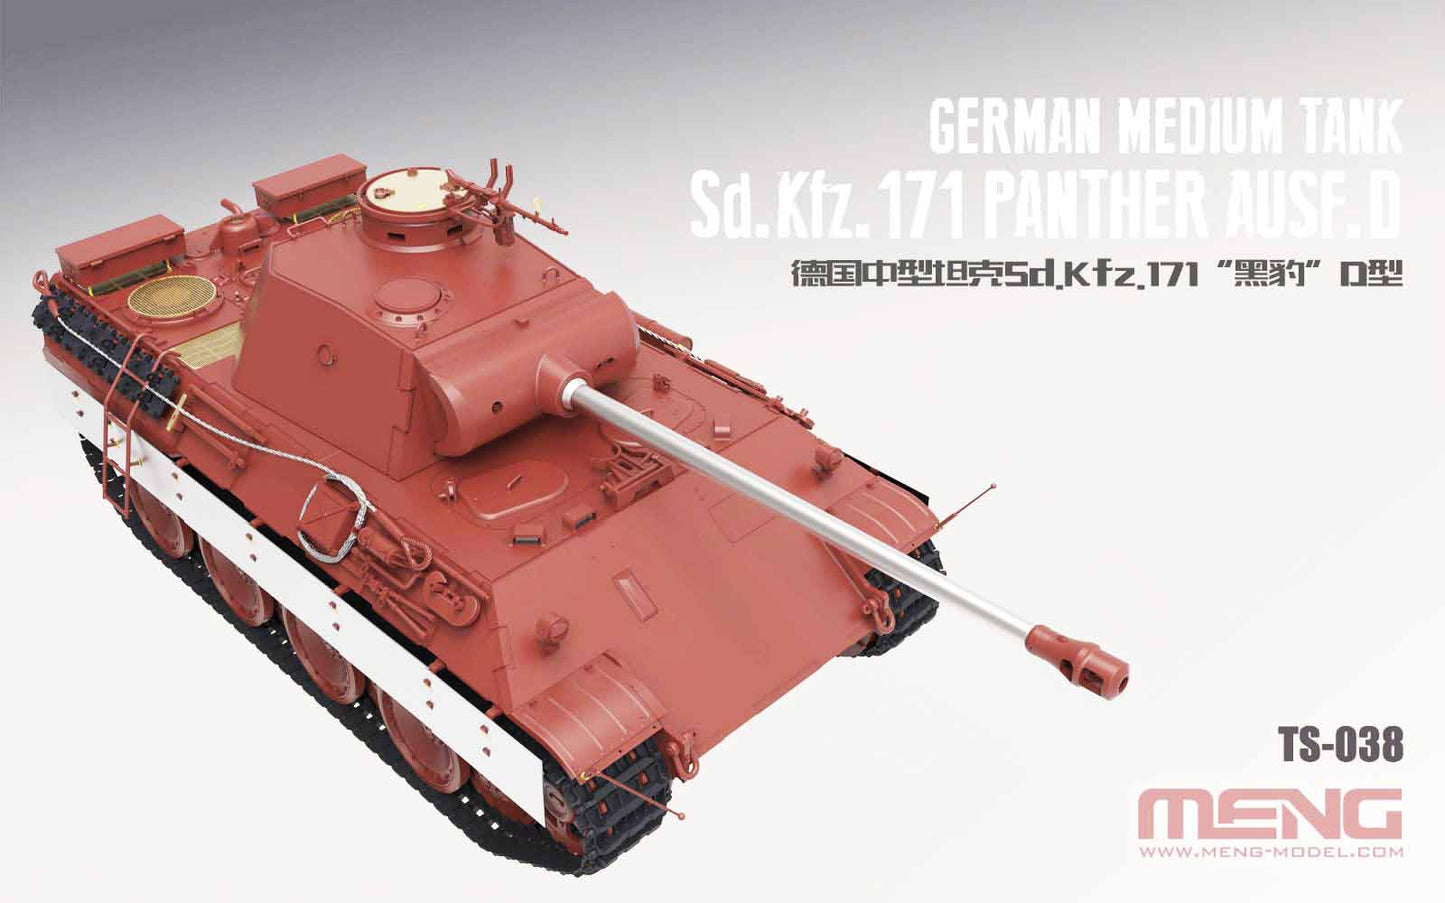 Meng 1/35 German Medium Tank Sd.Kfz.171 Panther Ausf.D Plastic Model Kit